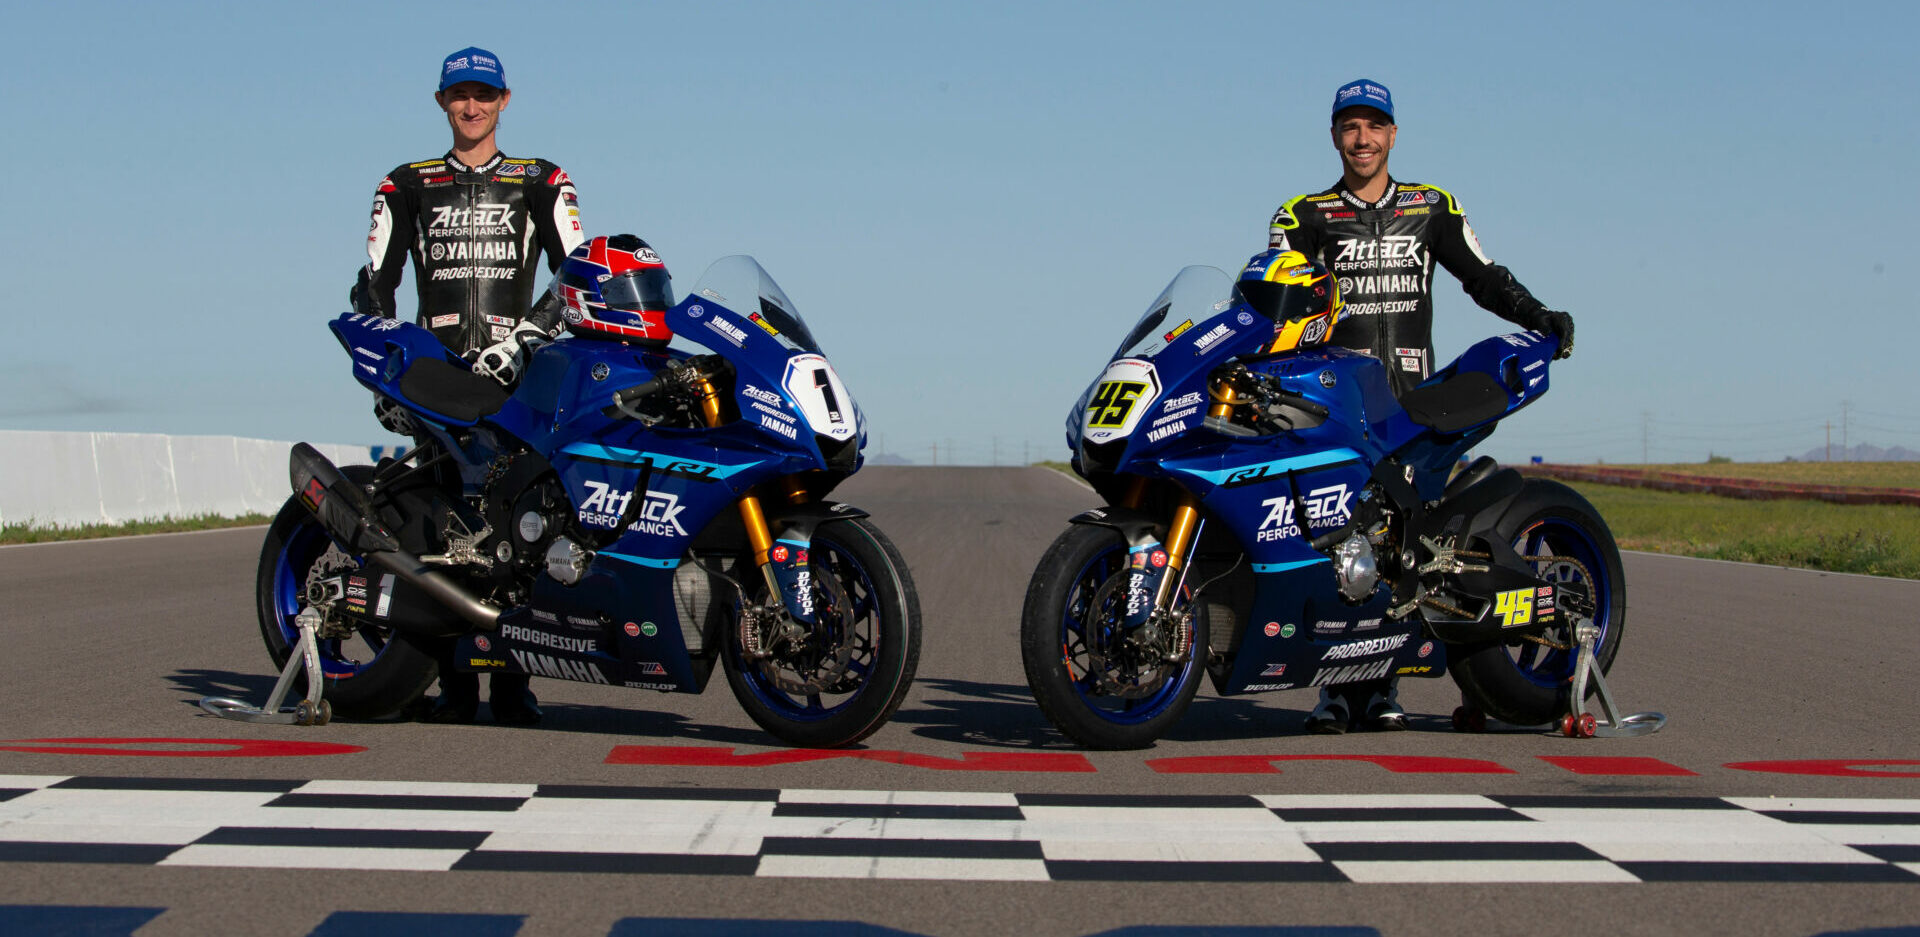 Attack Performance Progressive Yamaha's Jake Gagne (left) and Cameron Petersen (right). Photo courtesy Yamaha motor Corp., U.S.A.